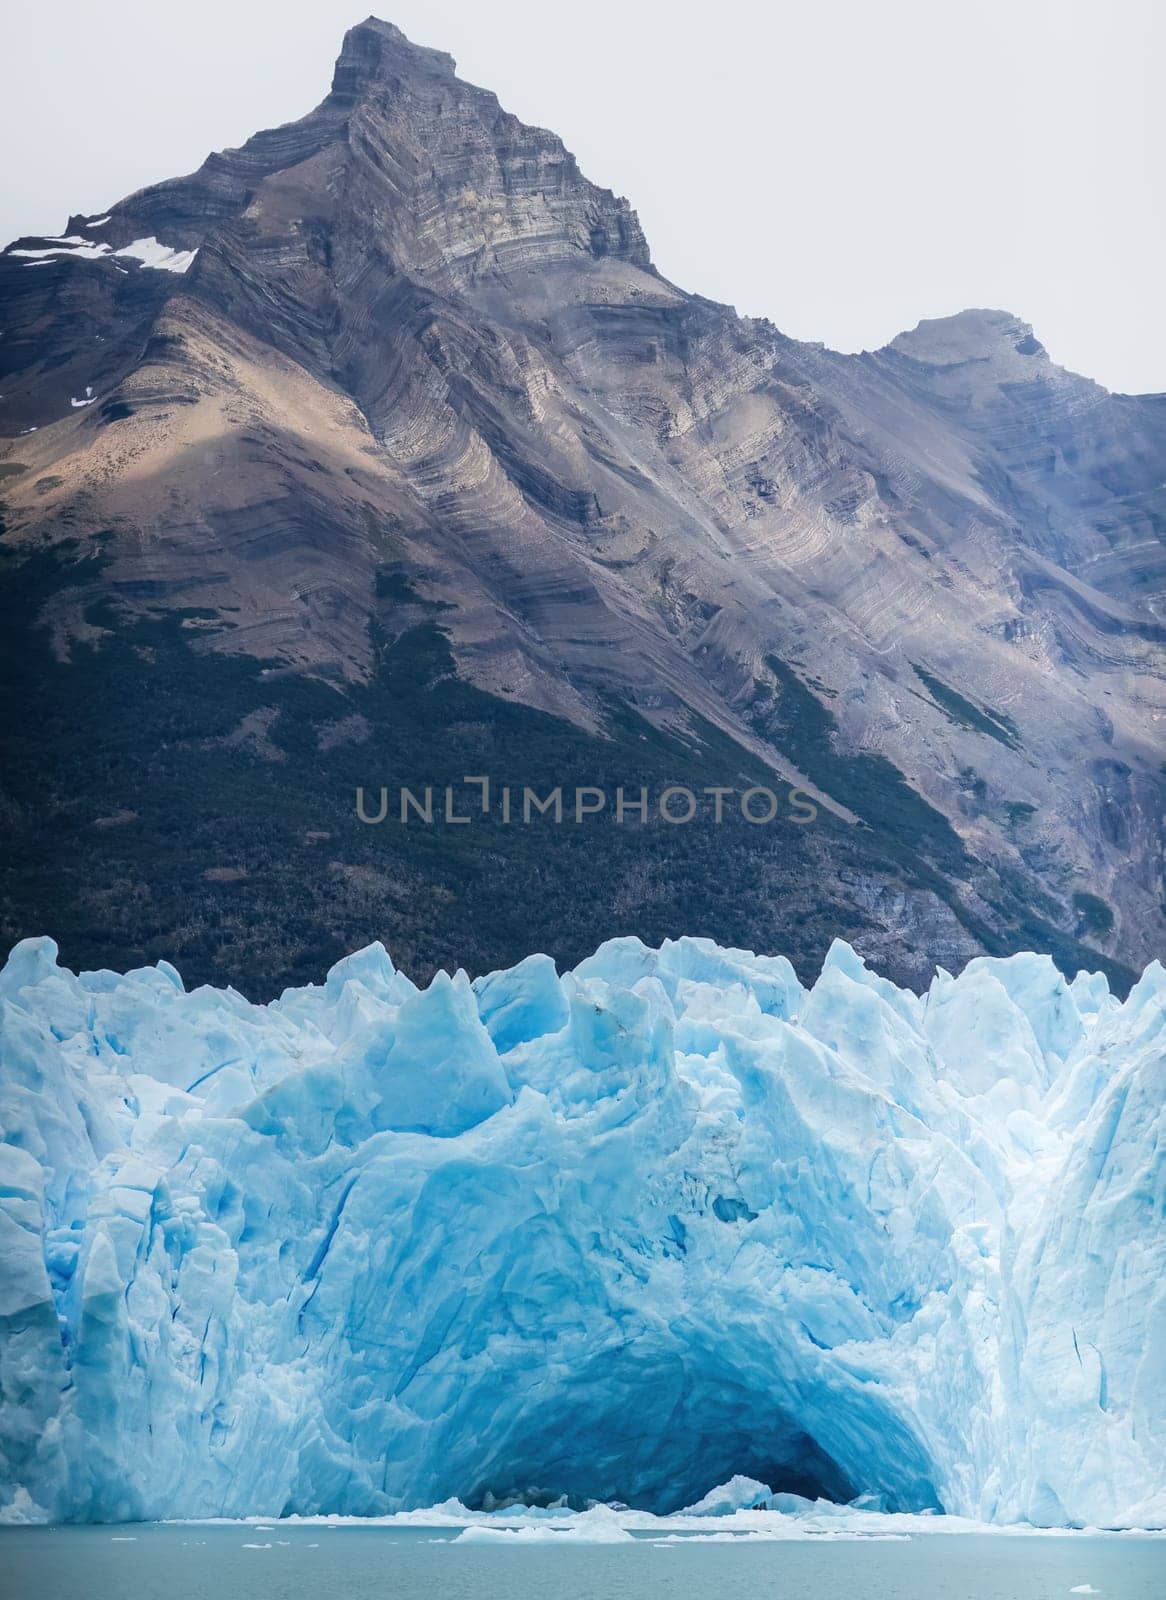 Glacier's vivid blue ice set against a contrasting dark mountain backdrop.